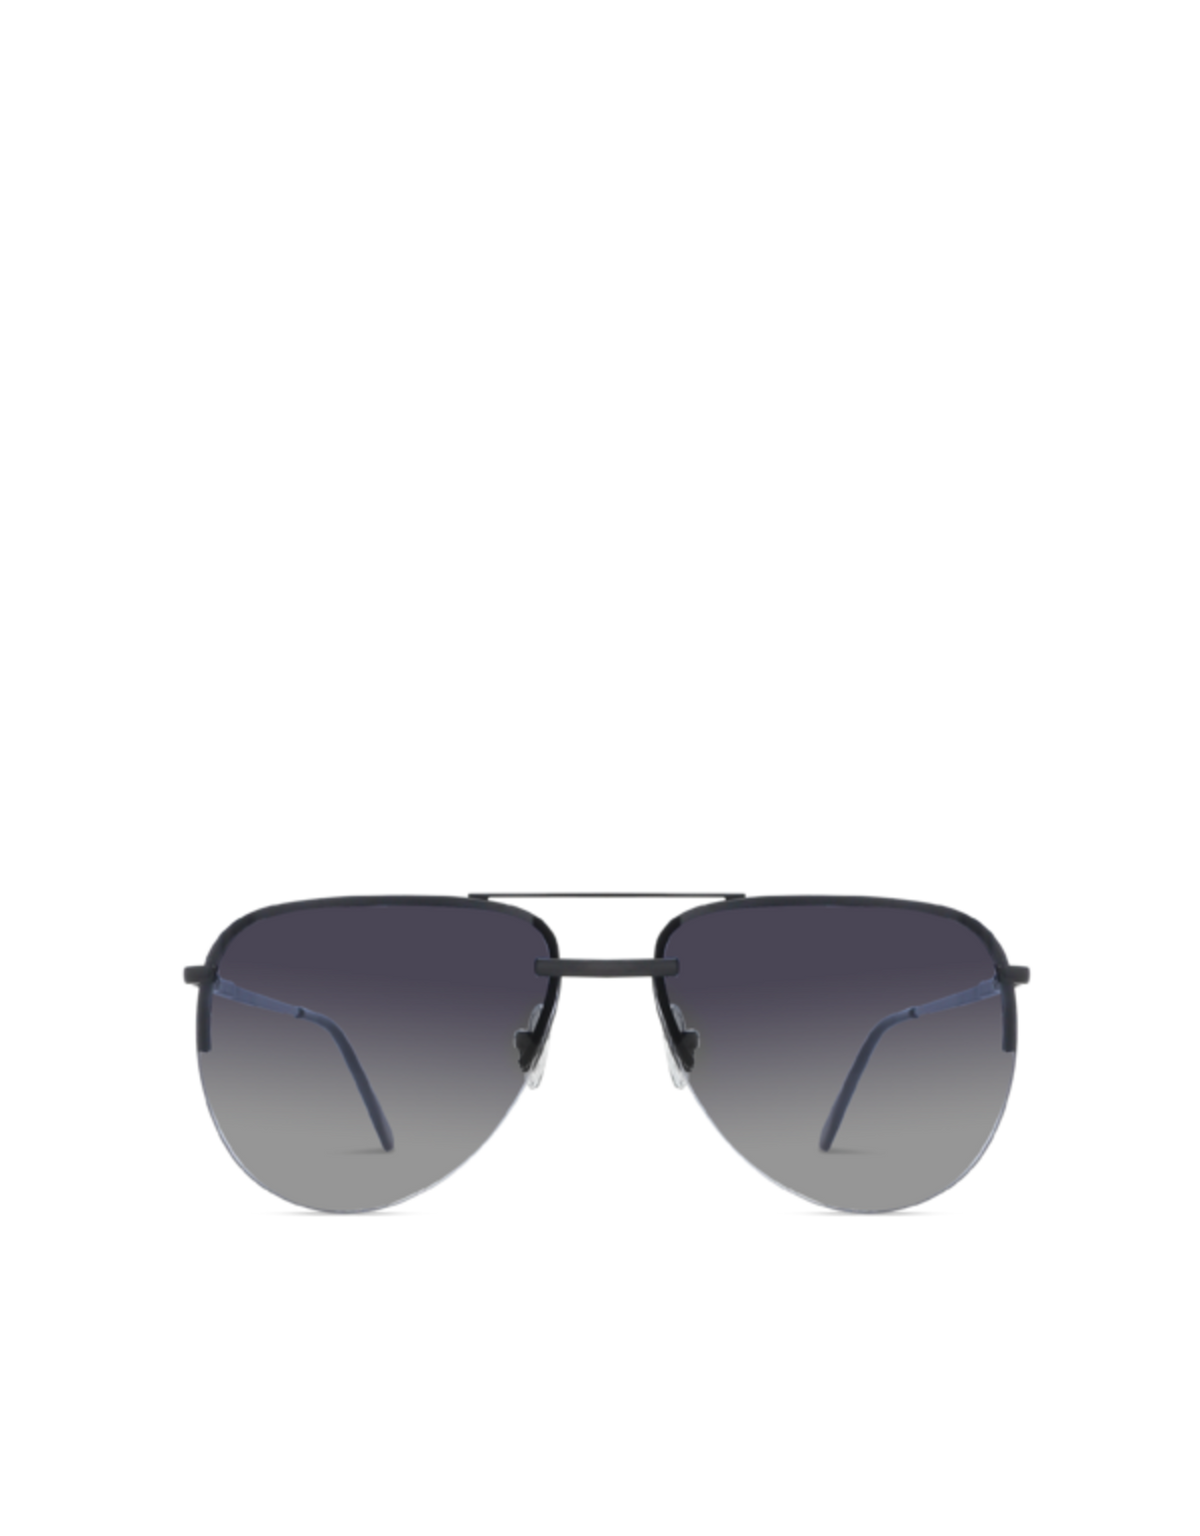 The Billini Hosk Sunglasses